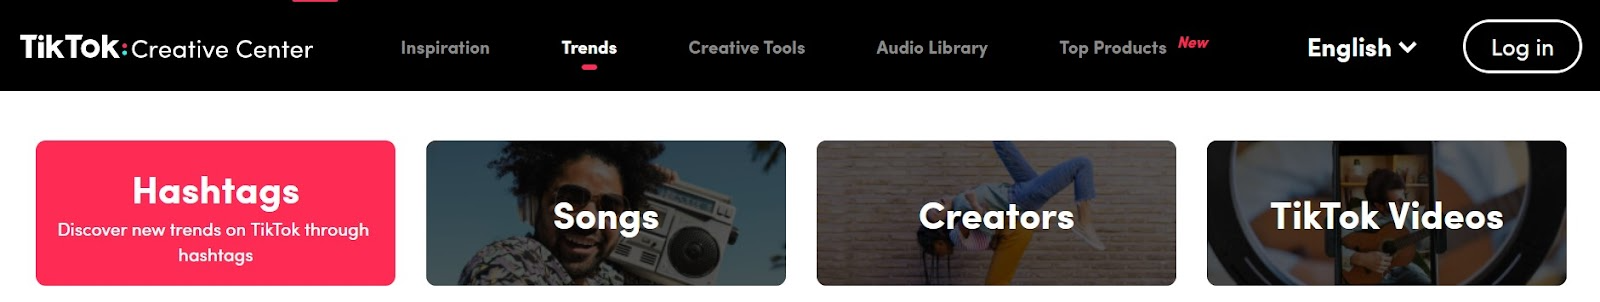 TikTok Creative Center website